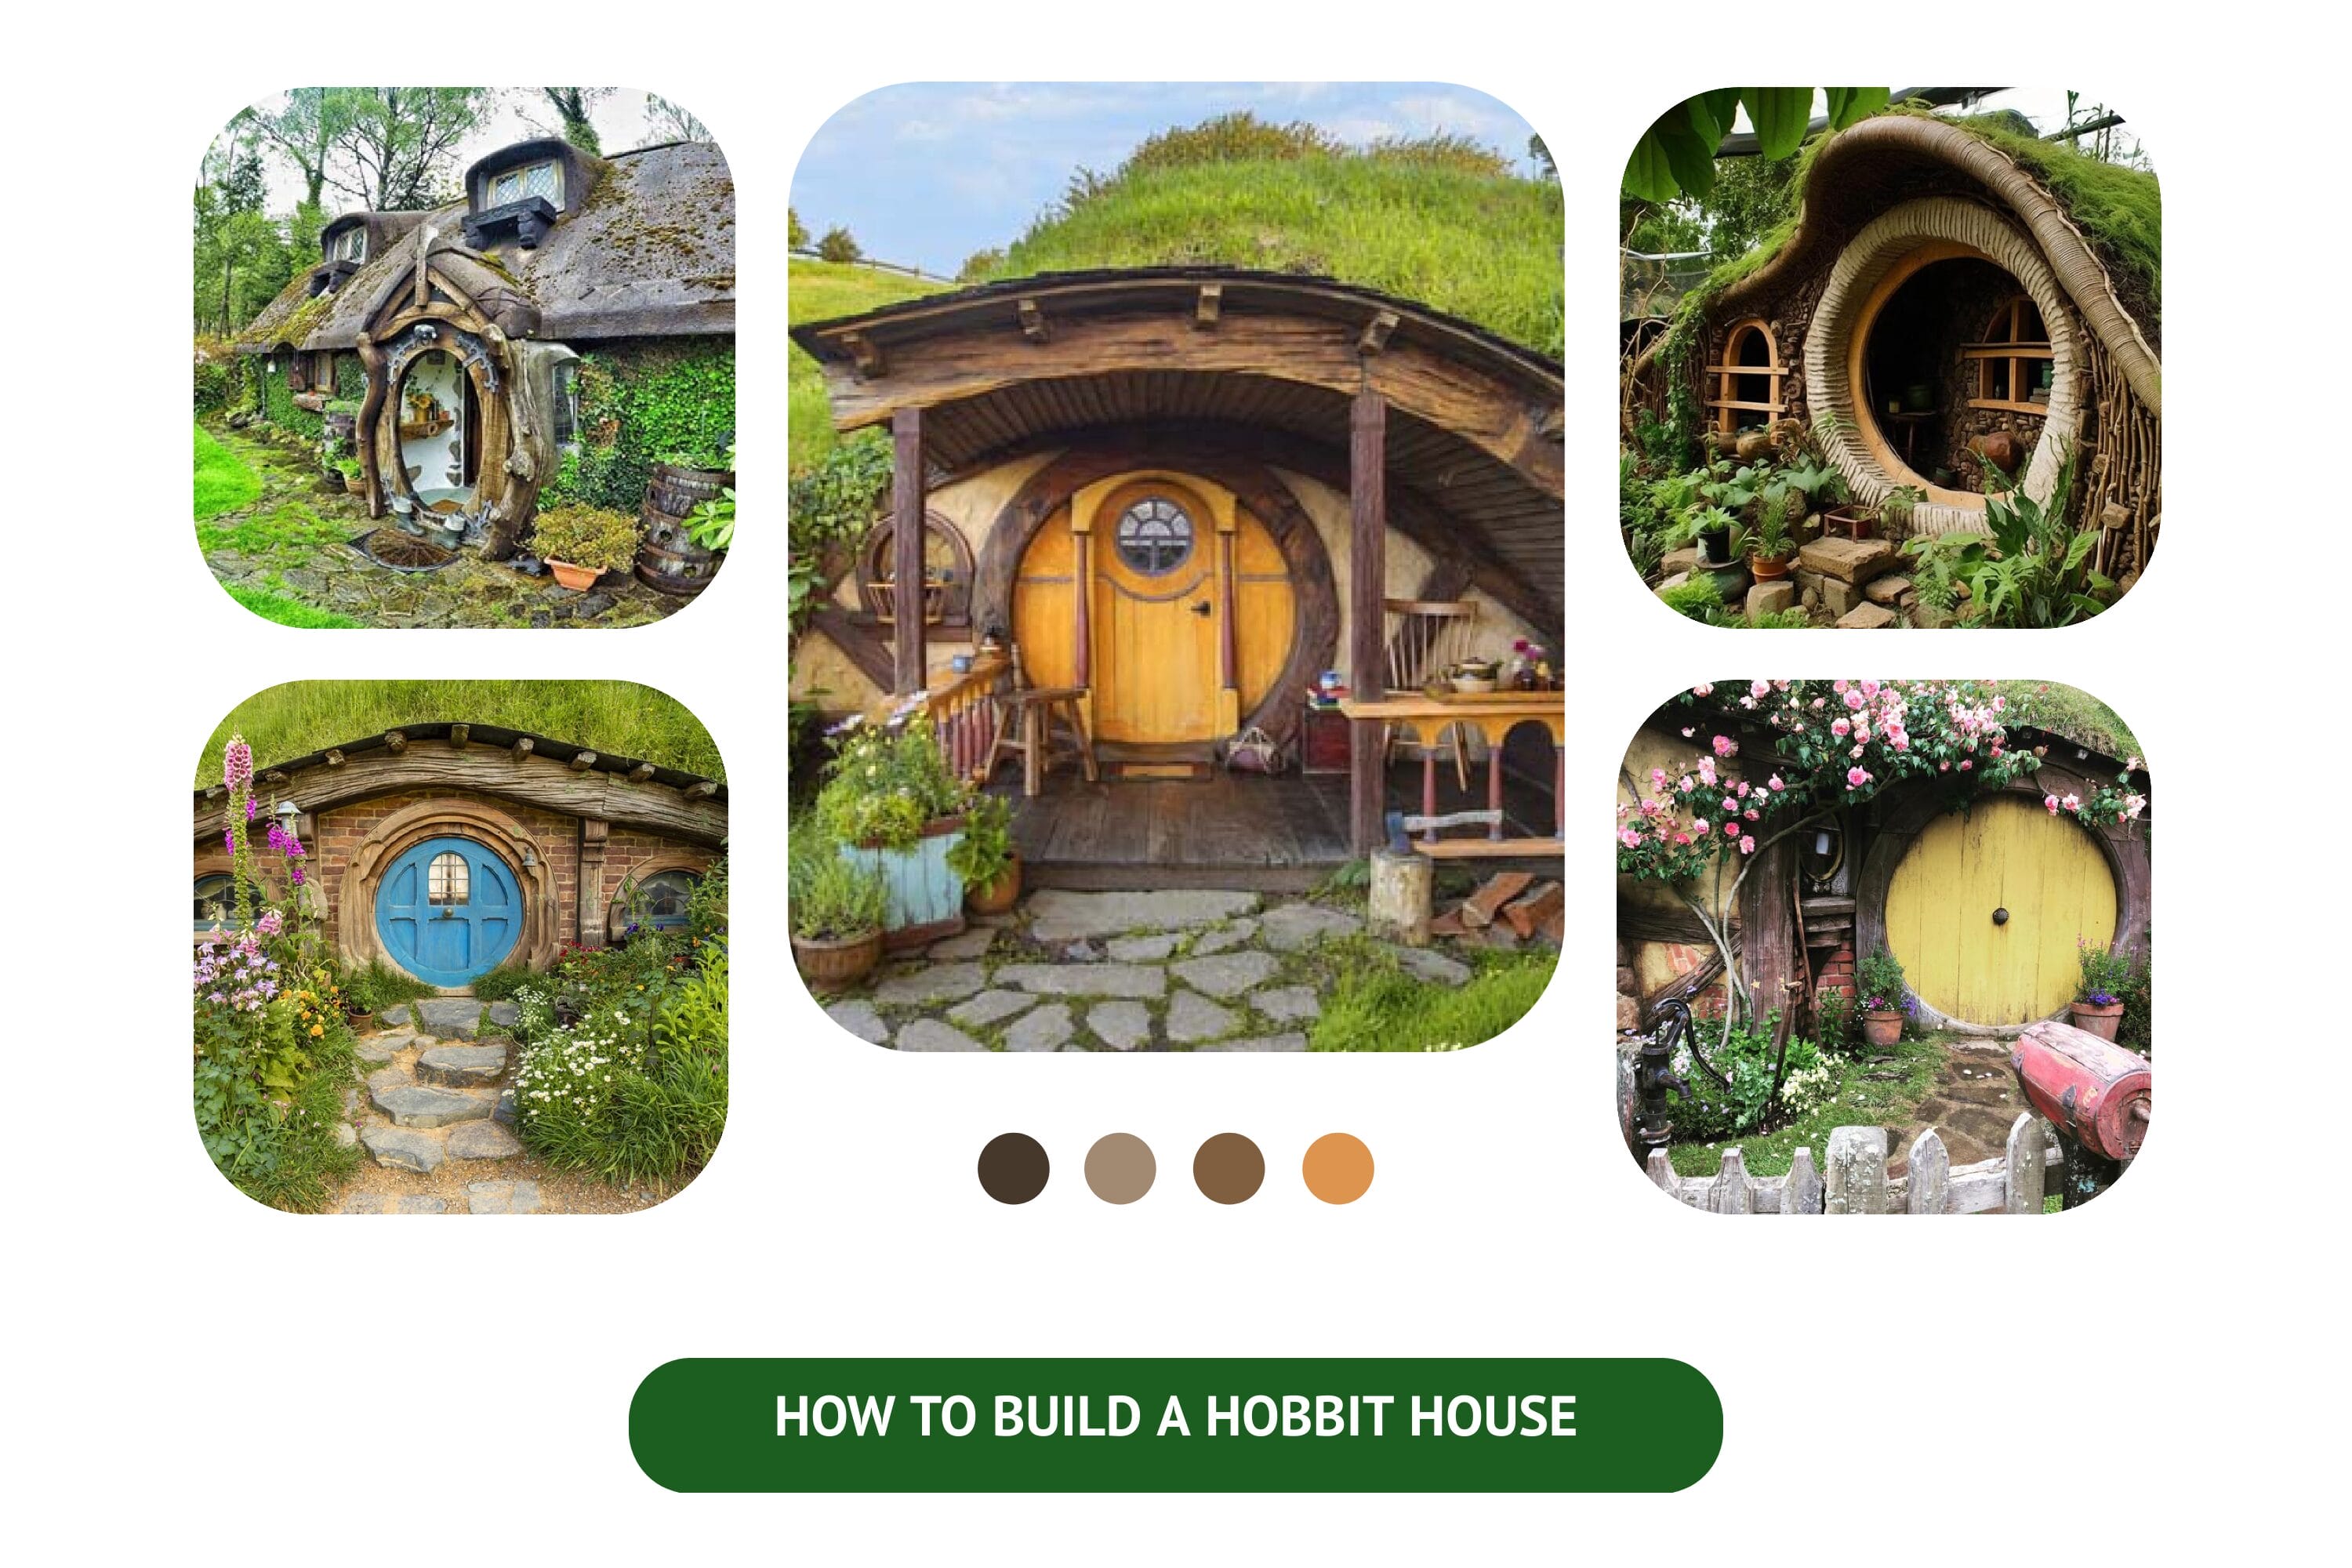 Design an exterior for a hobbit house.